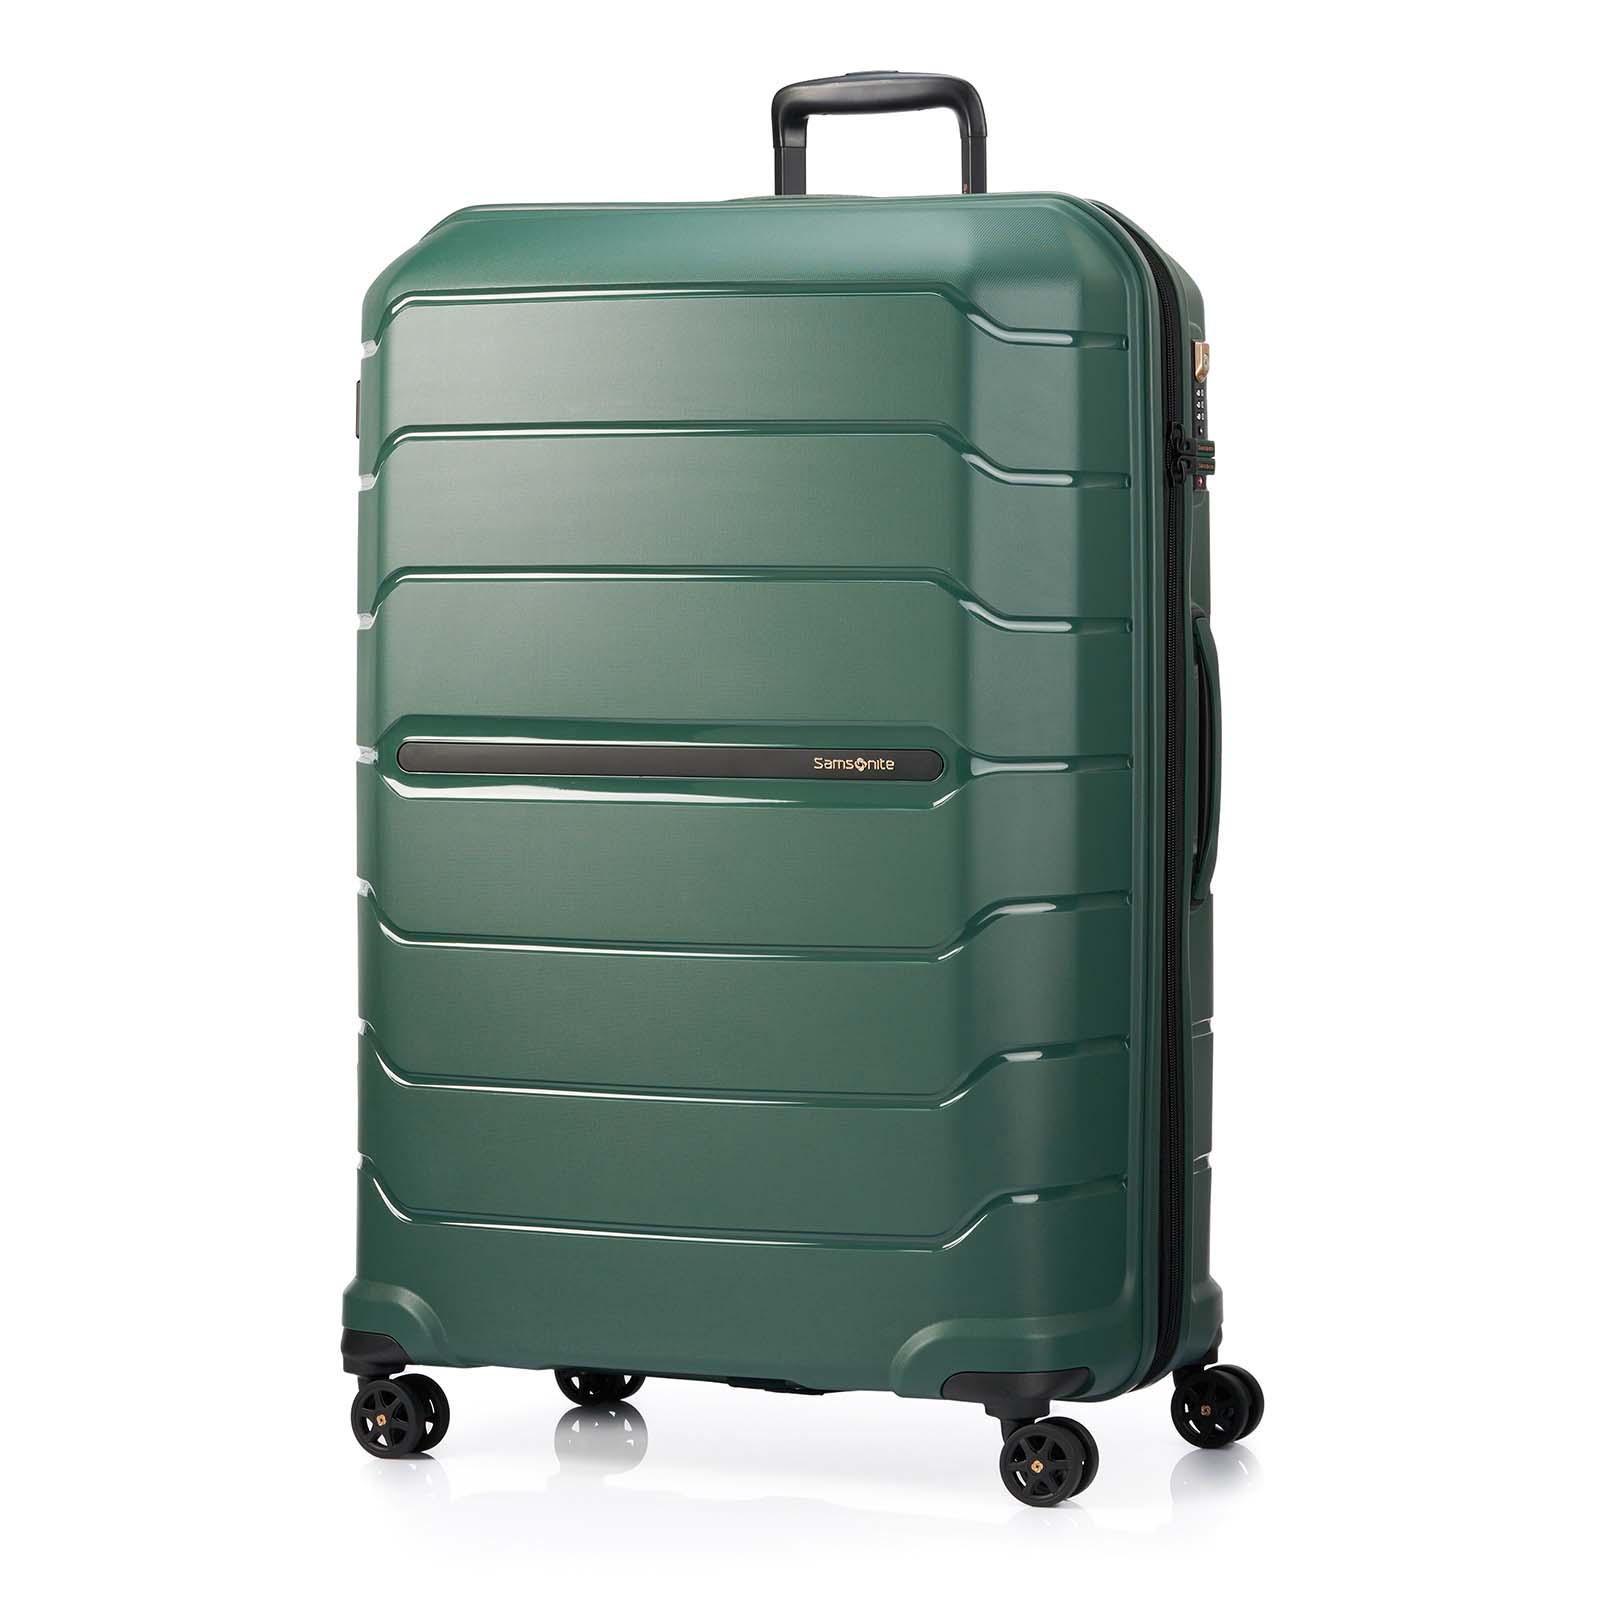 Samsonite-Oc2lite-81cm-Suitcase-Urban-Green-Front-Angle